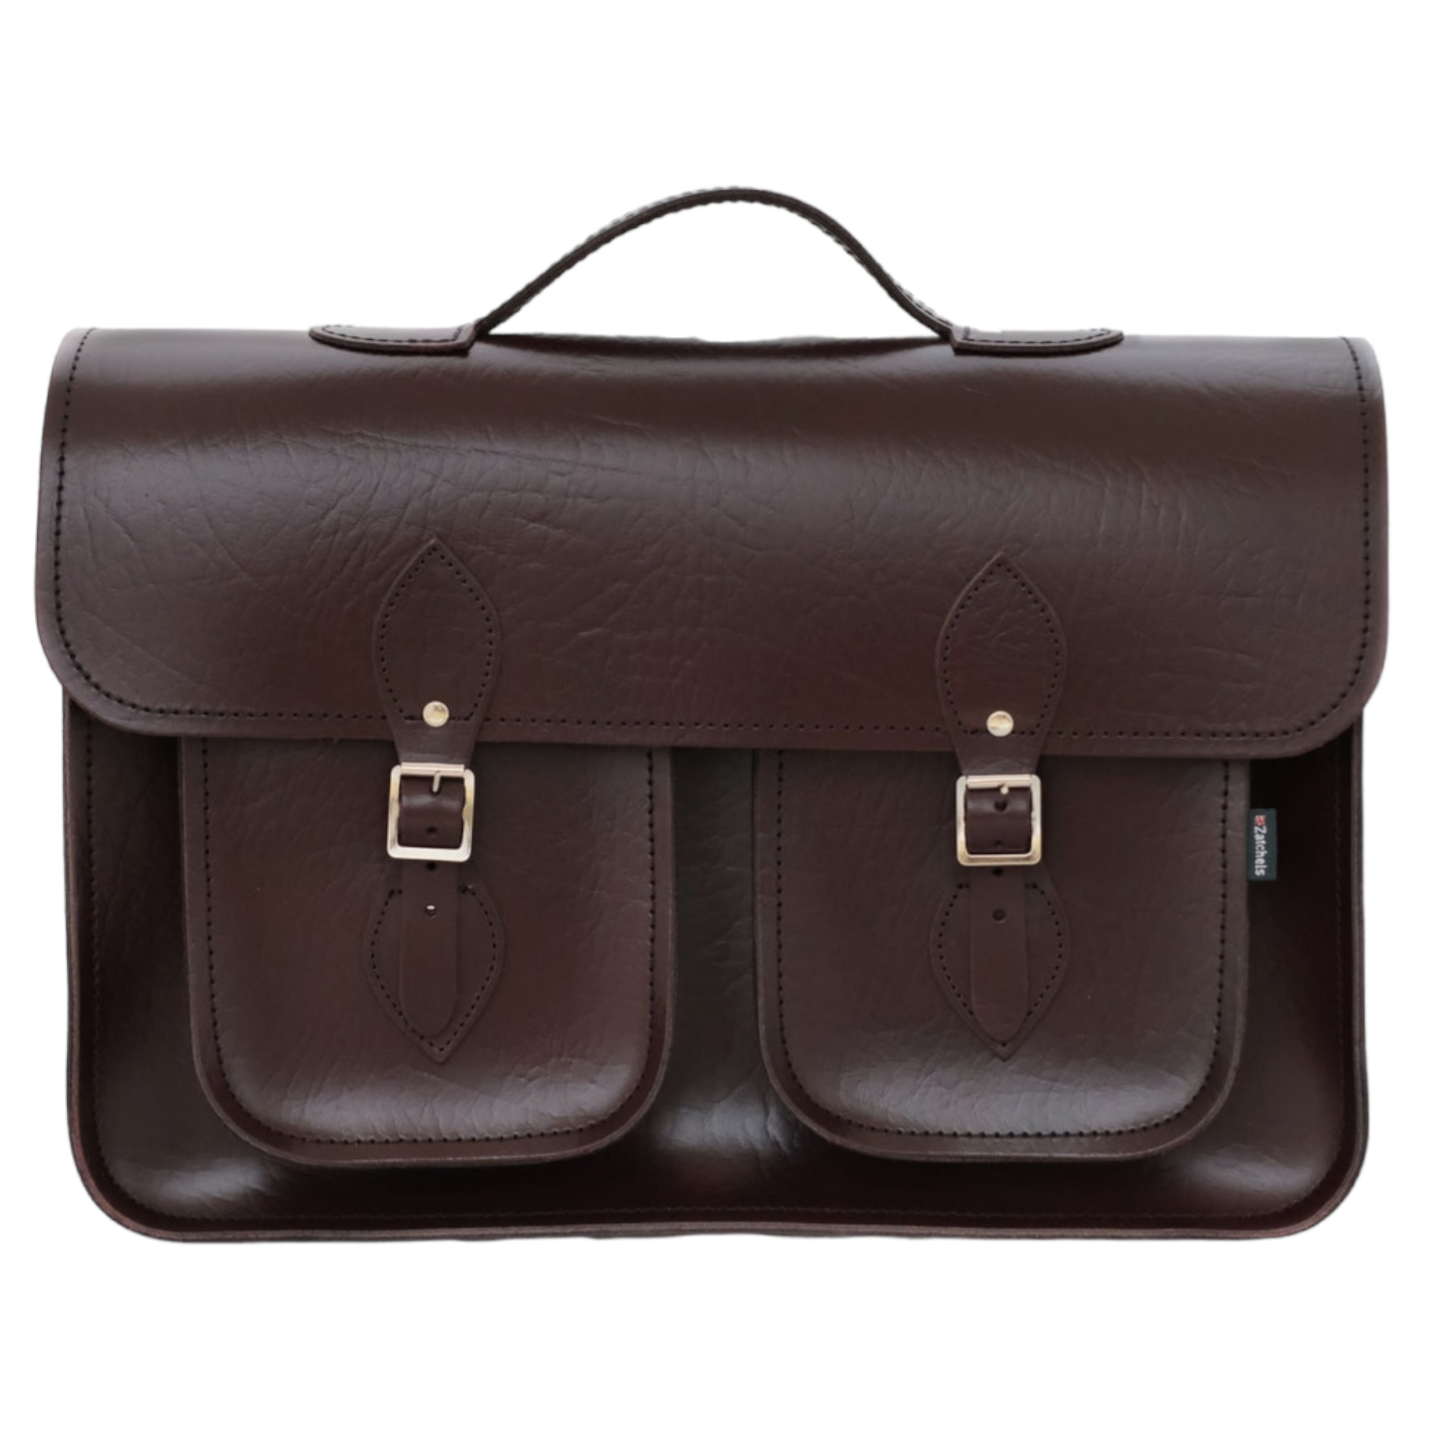 Twin Pocket Executive Handmade Leather Satchel - Marsala Red - 17.5"